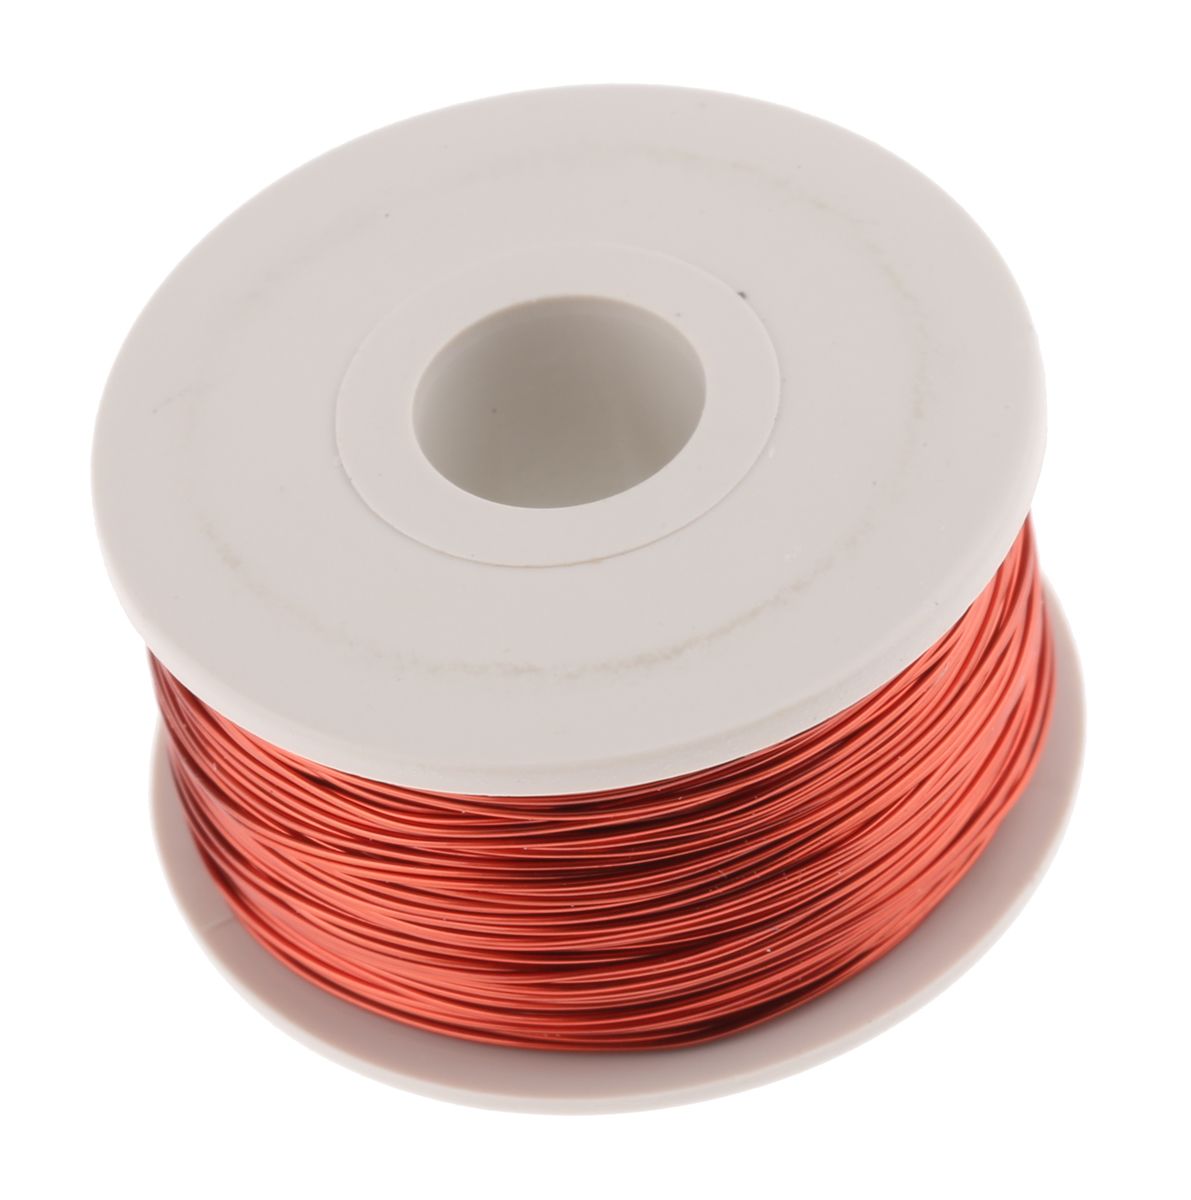 Vero Technologies Verowire Series Pink Test Lead Wire, 40m, PUR Insulation